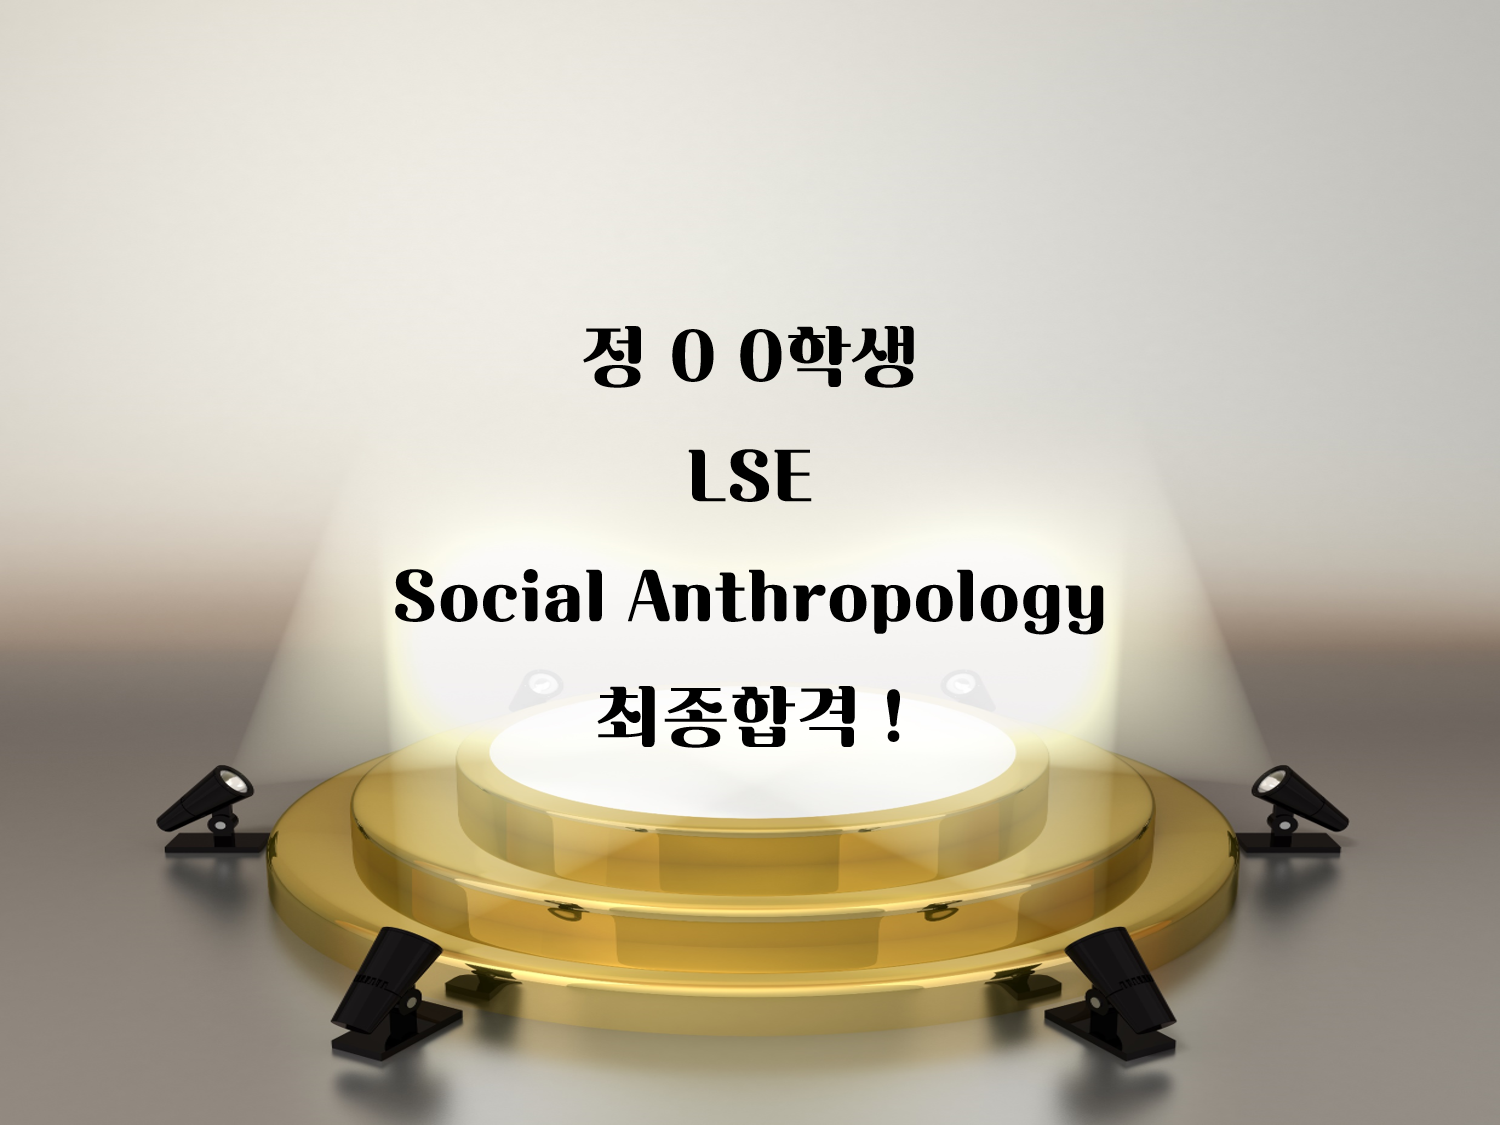 LSE: Social Anthropology